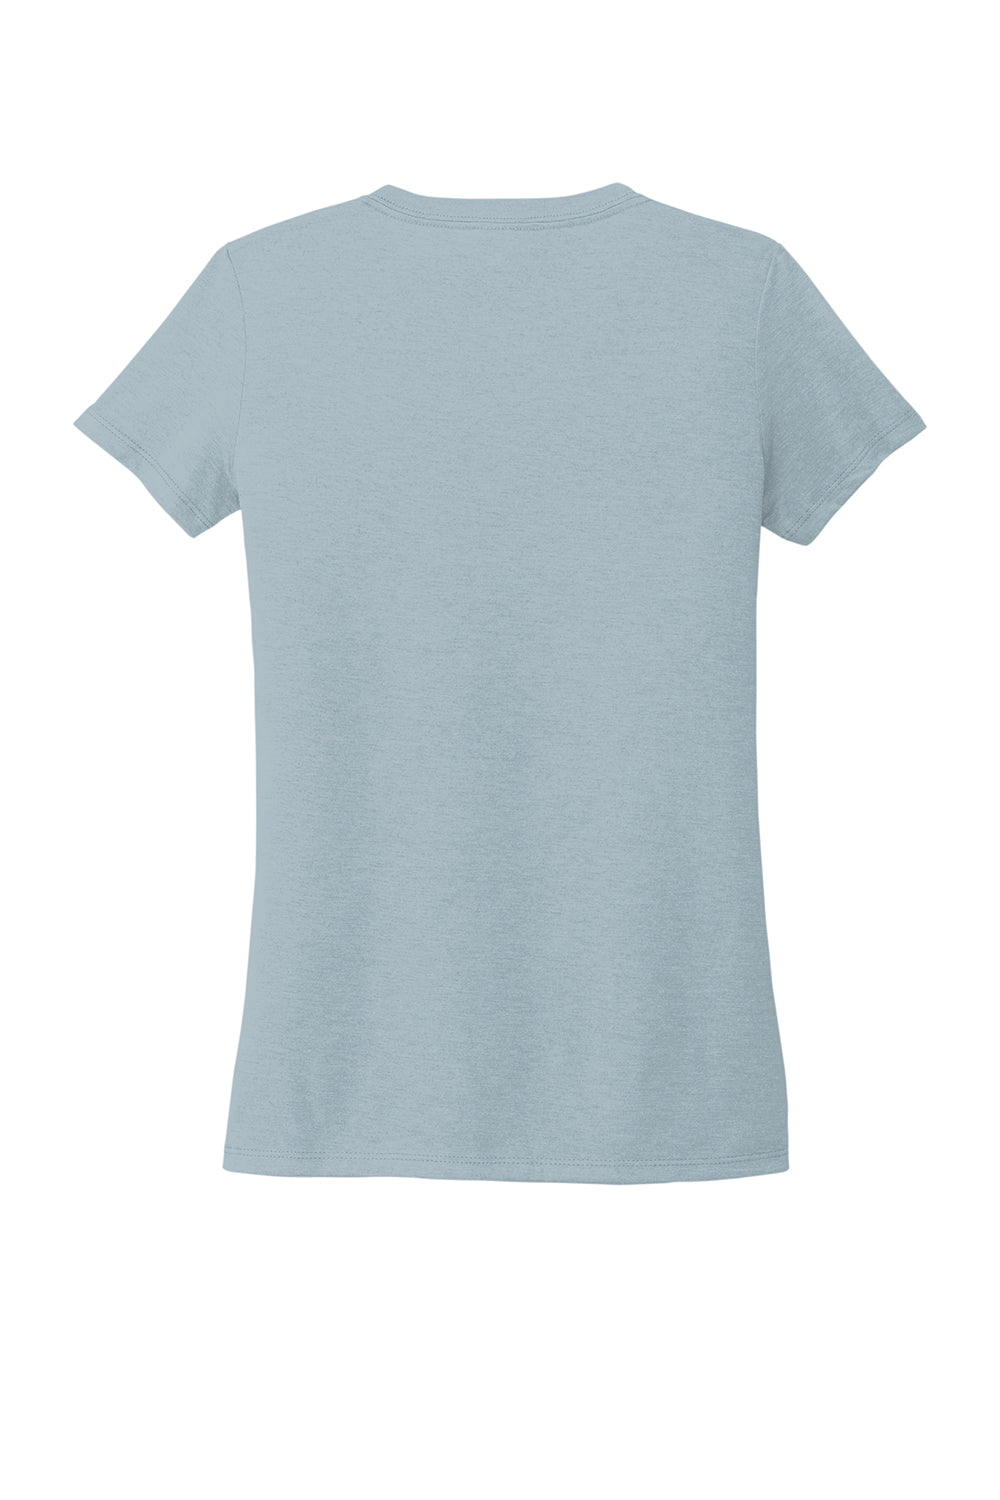 Allmade AL2018 Womens Short Sleeve V-Neck T-Shirt I Like You Blue Flat Back